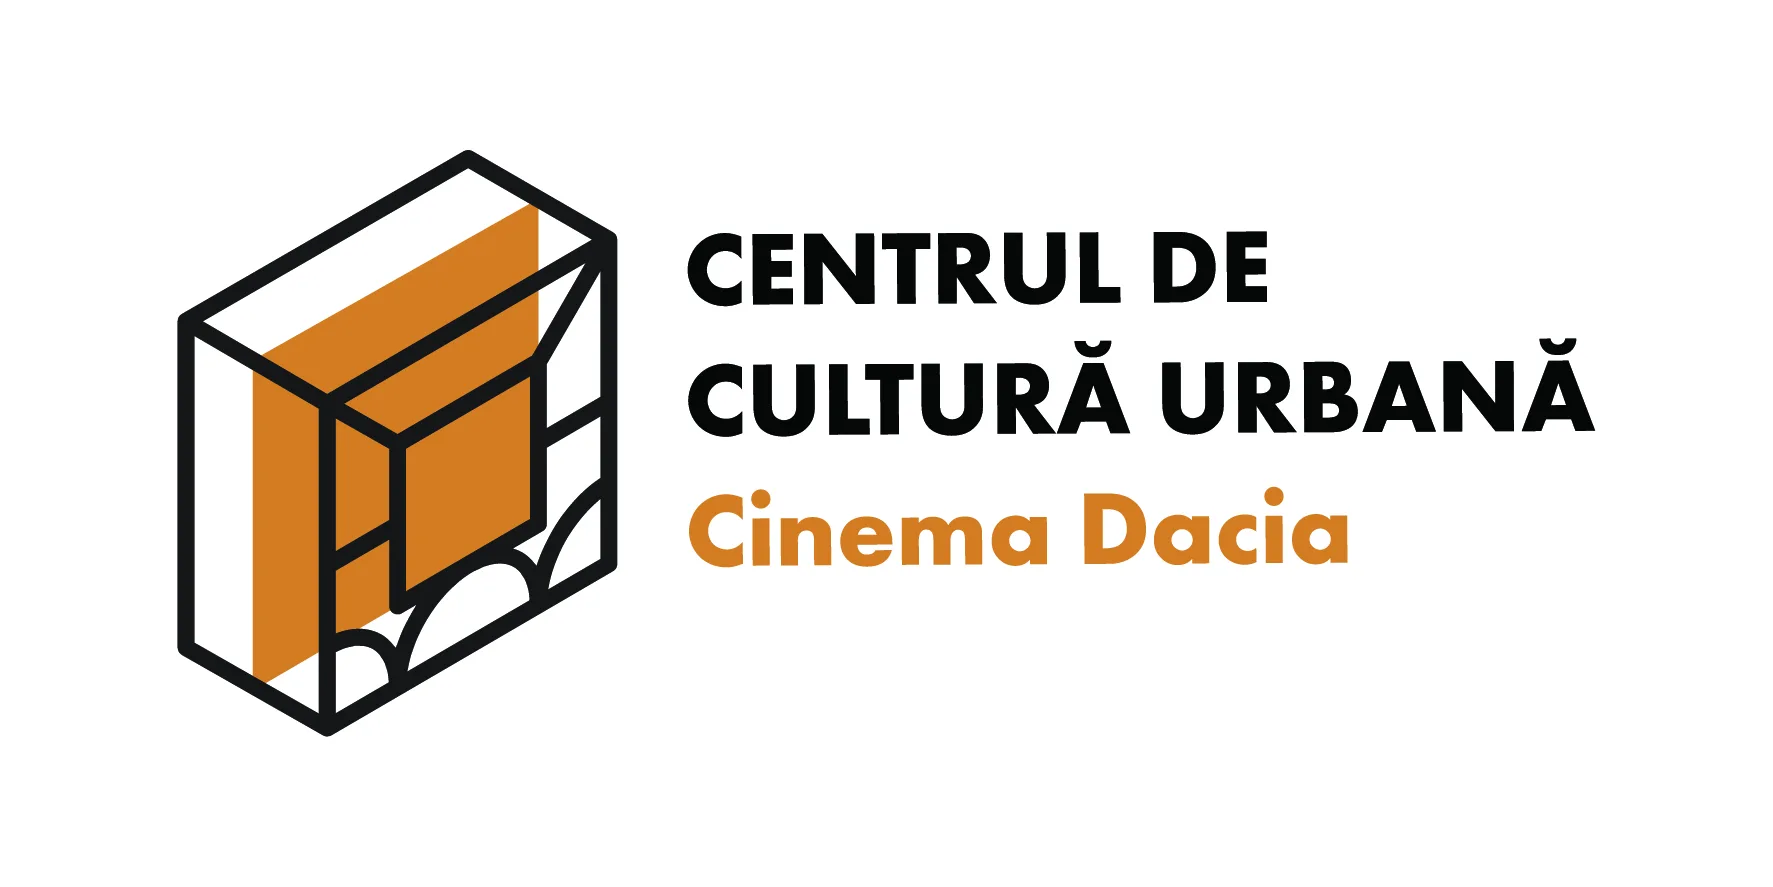 CCU_Cinema_Dacia-01-jpg